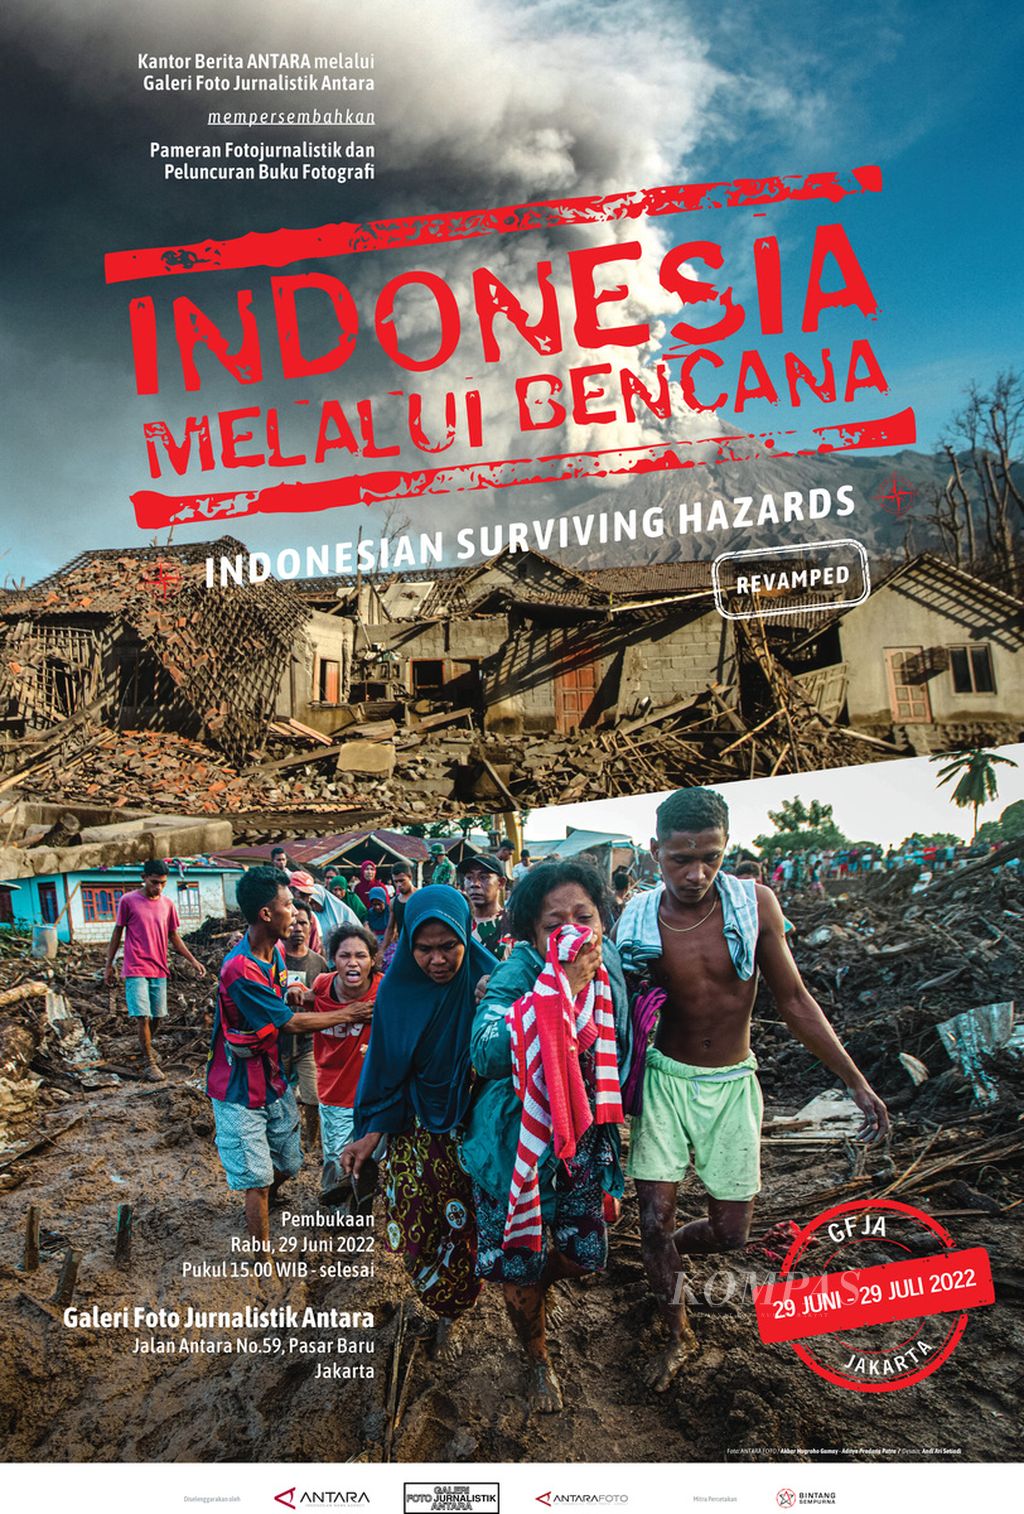 Poster pameran foto jurnalistik Indonesia Melalui Bencana yang digelar di Galeri Foto Jurnalistik Antara (GFJA), Pasar Baru, Jakarta, 29 Juni-29 Juli 2022.